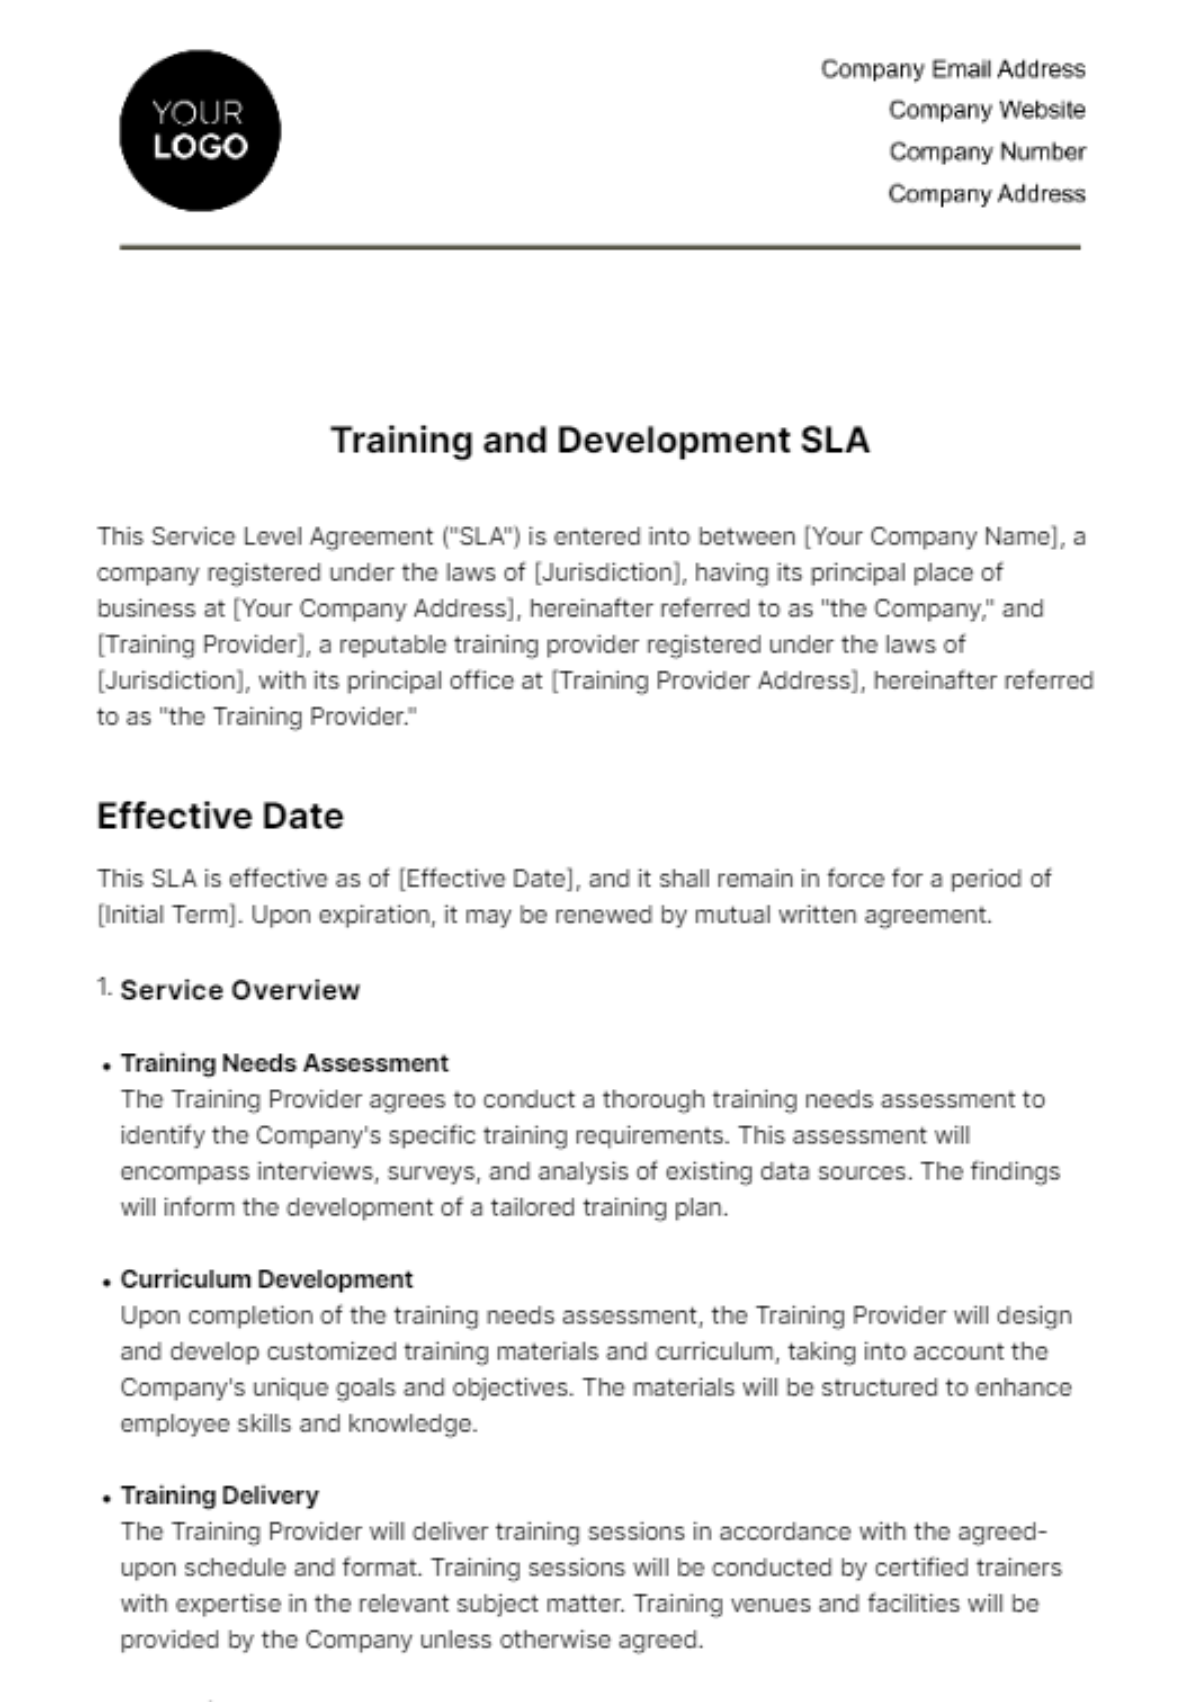 Training & Development SLA HR Template